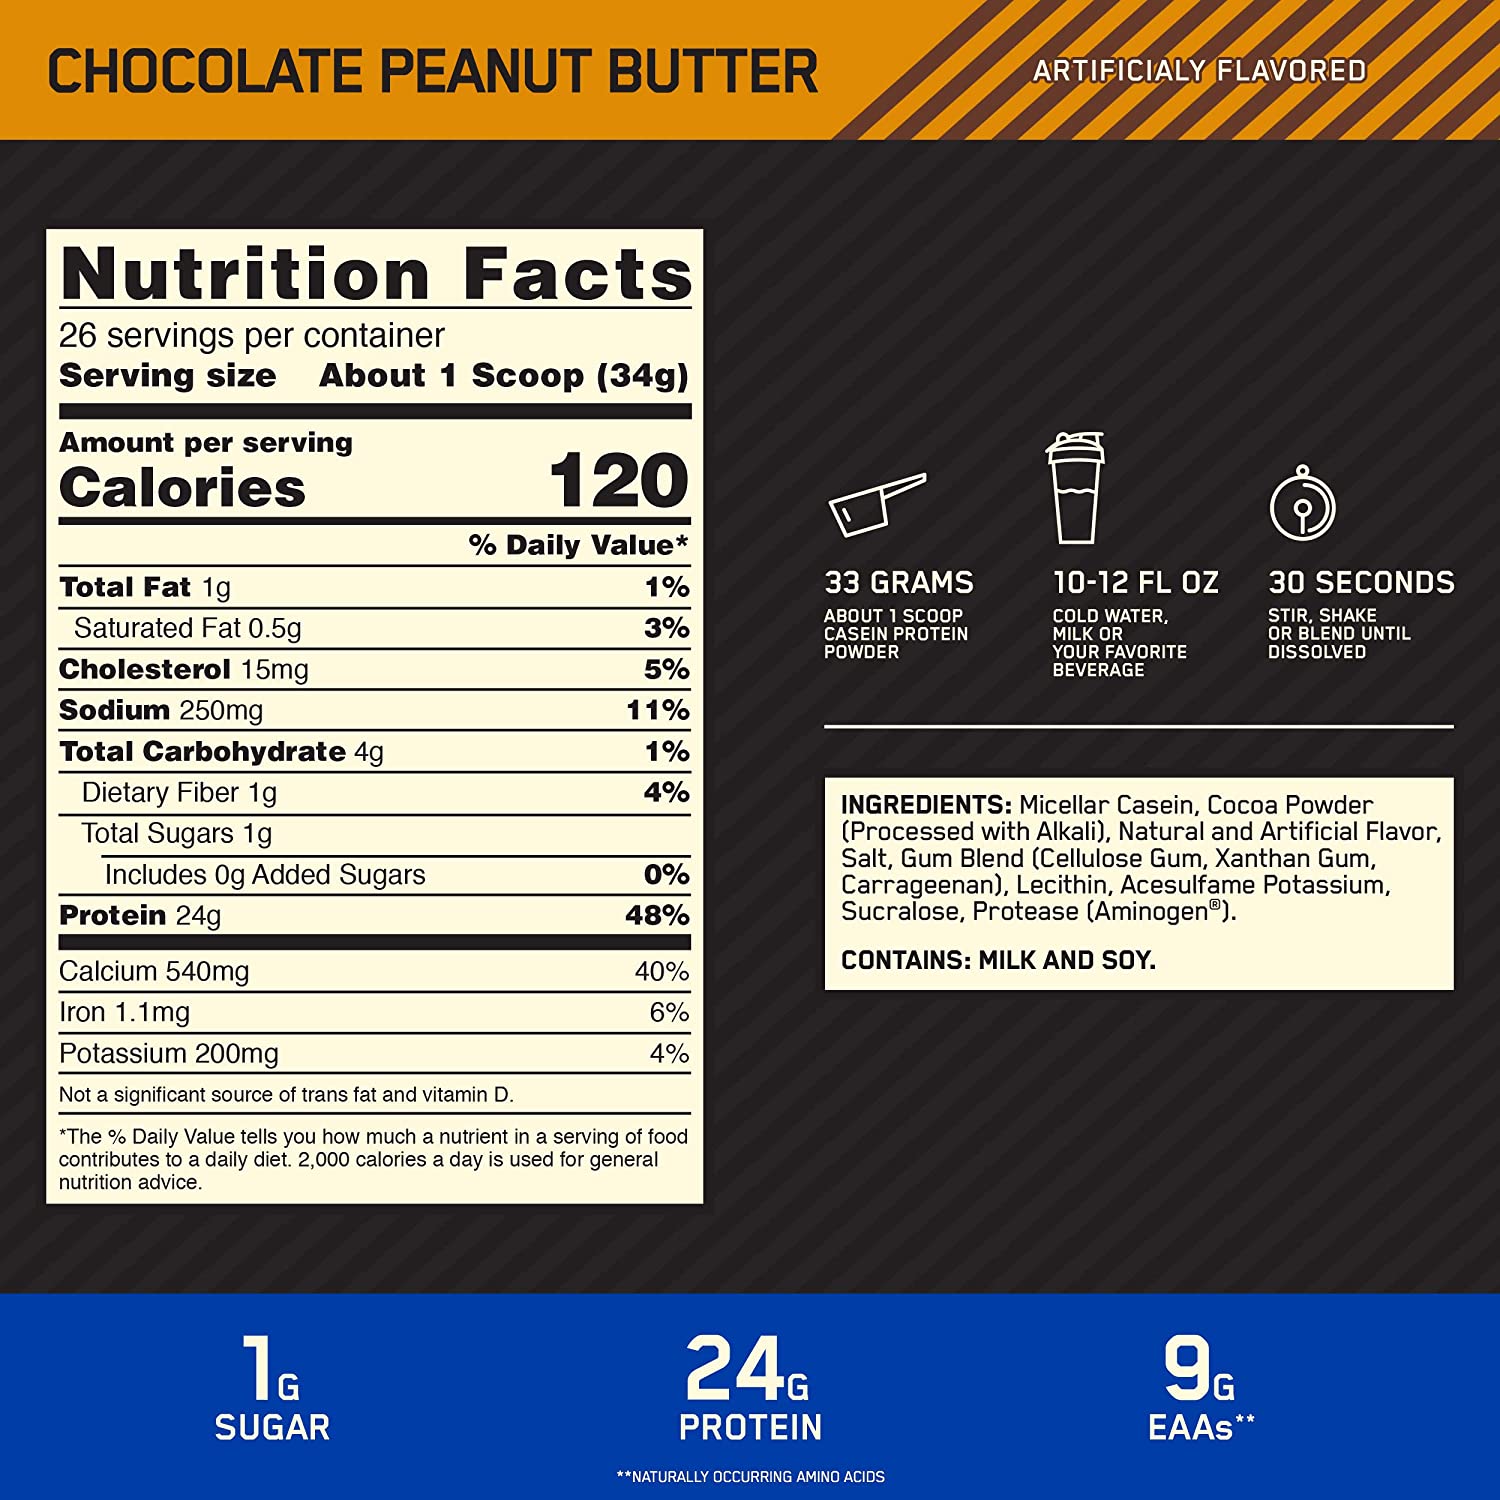 Gold Standard 100% Casein 2lbs / Chocolate Peanut Butter